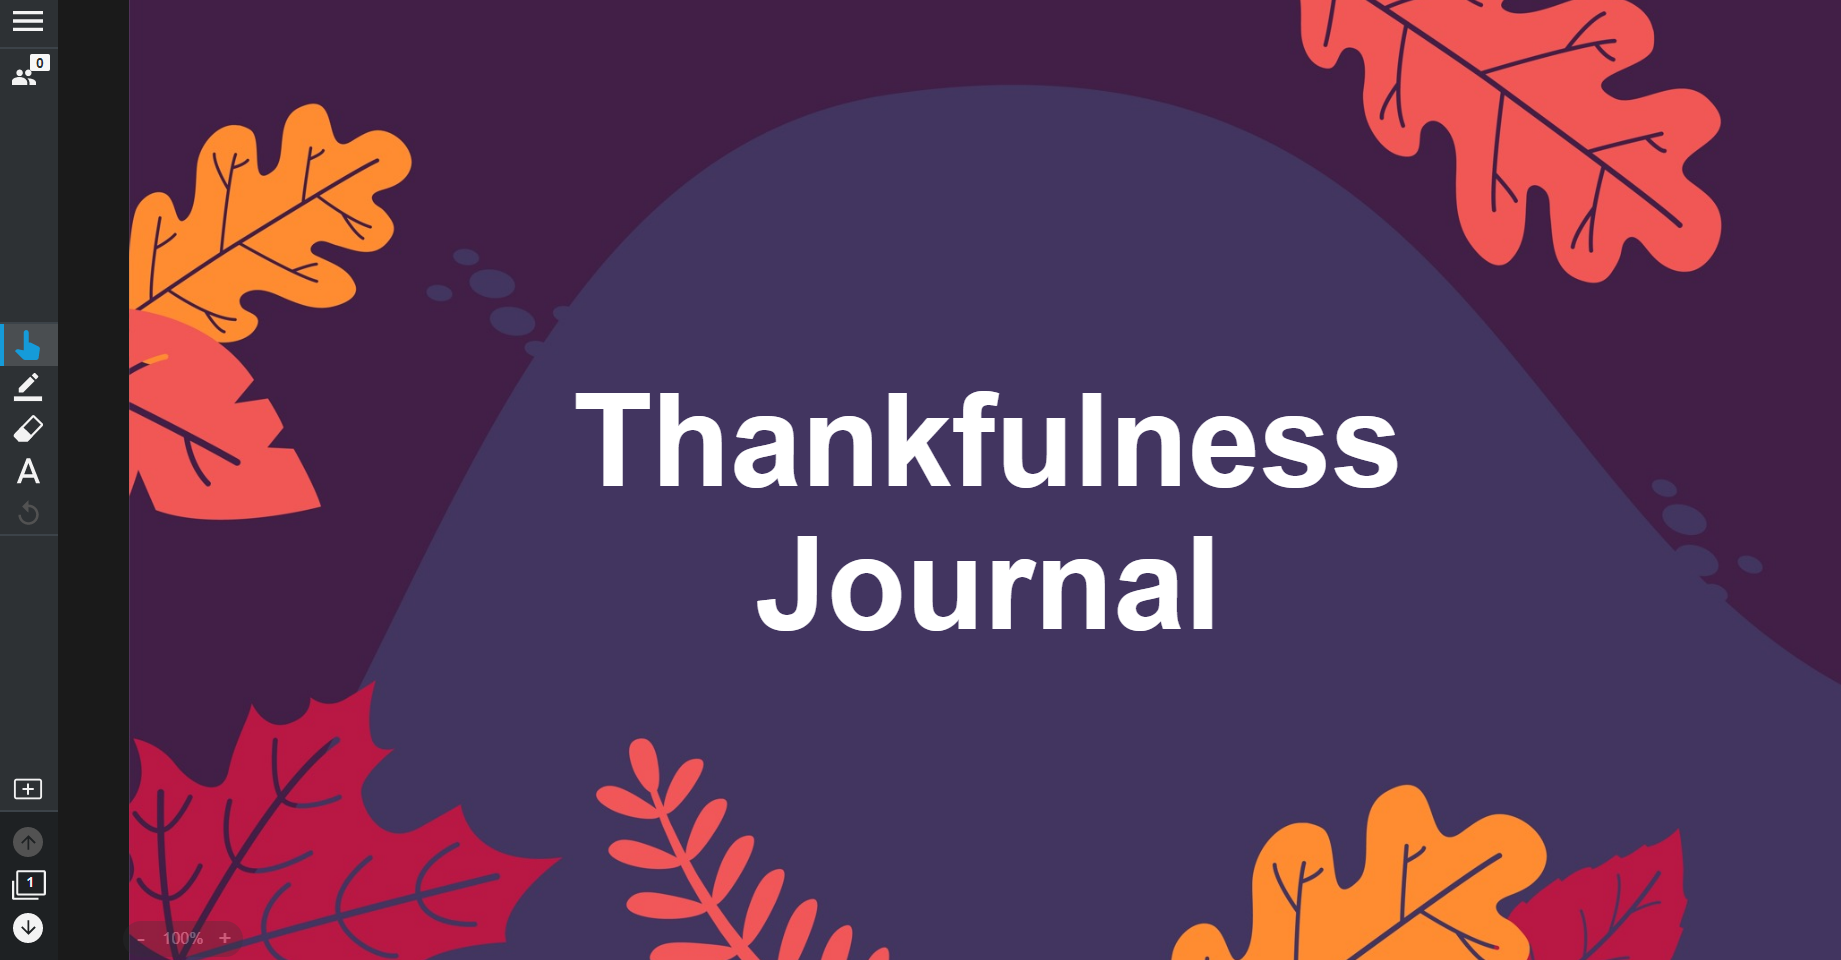 Thankfulness Journal